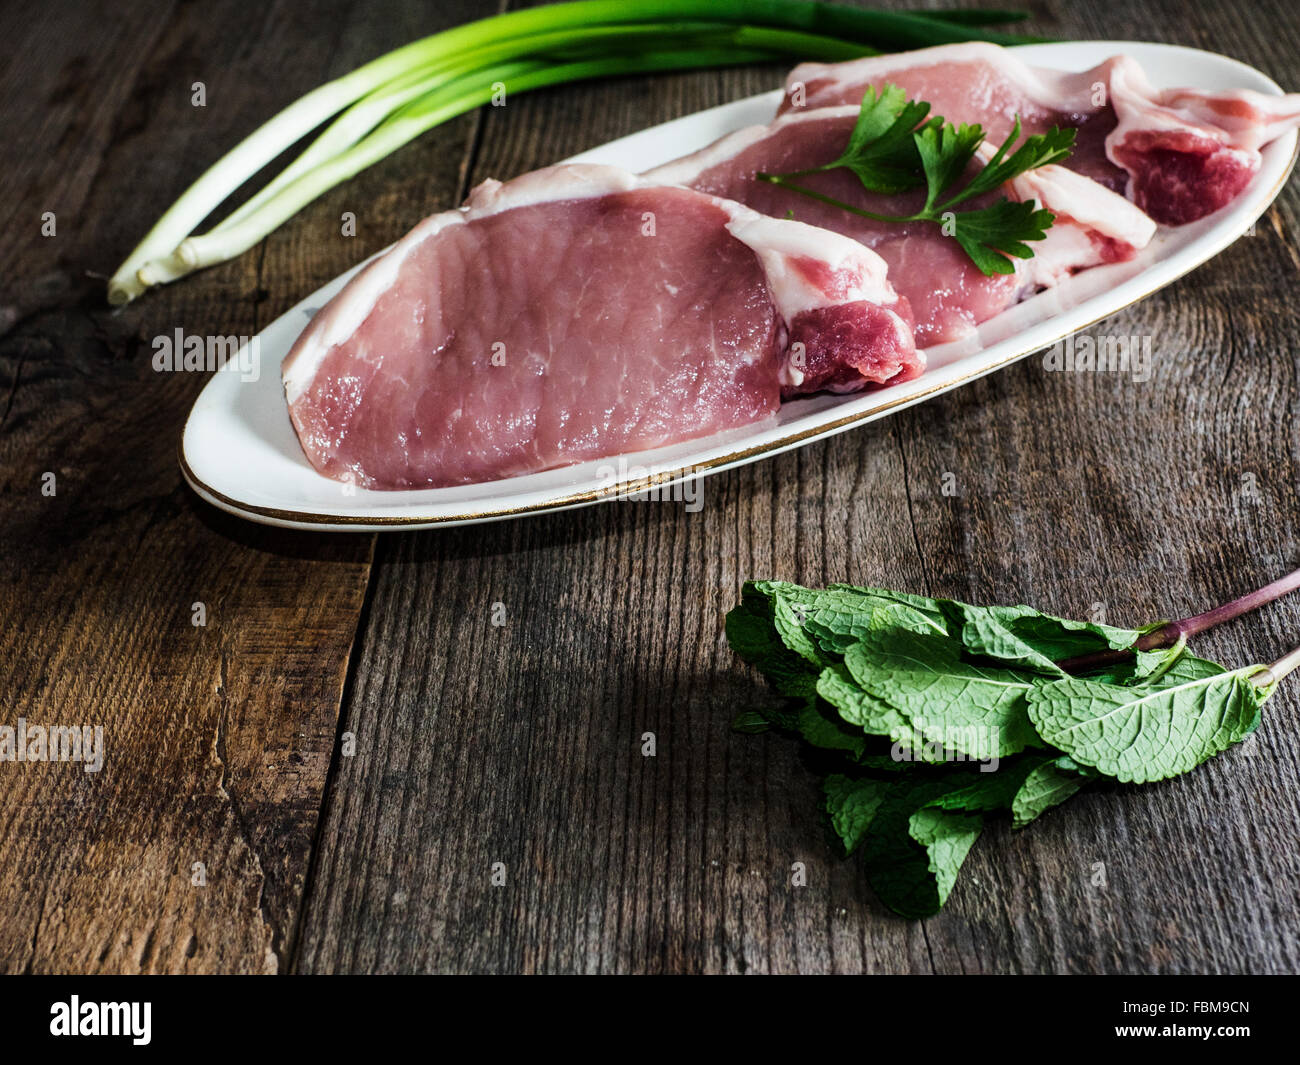 Pork chops on a plate Stock Photo